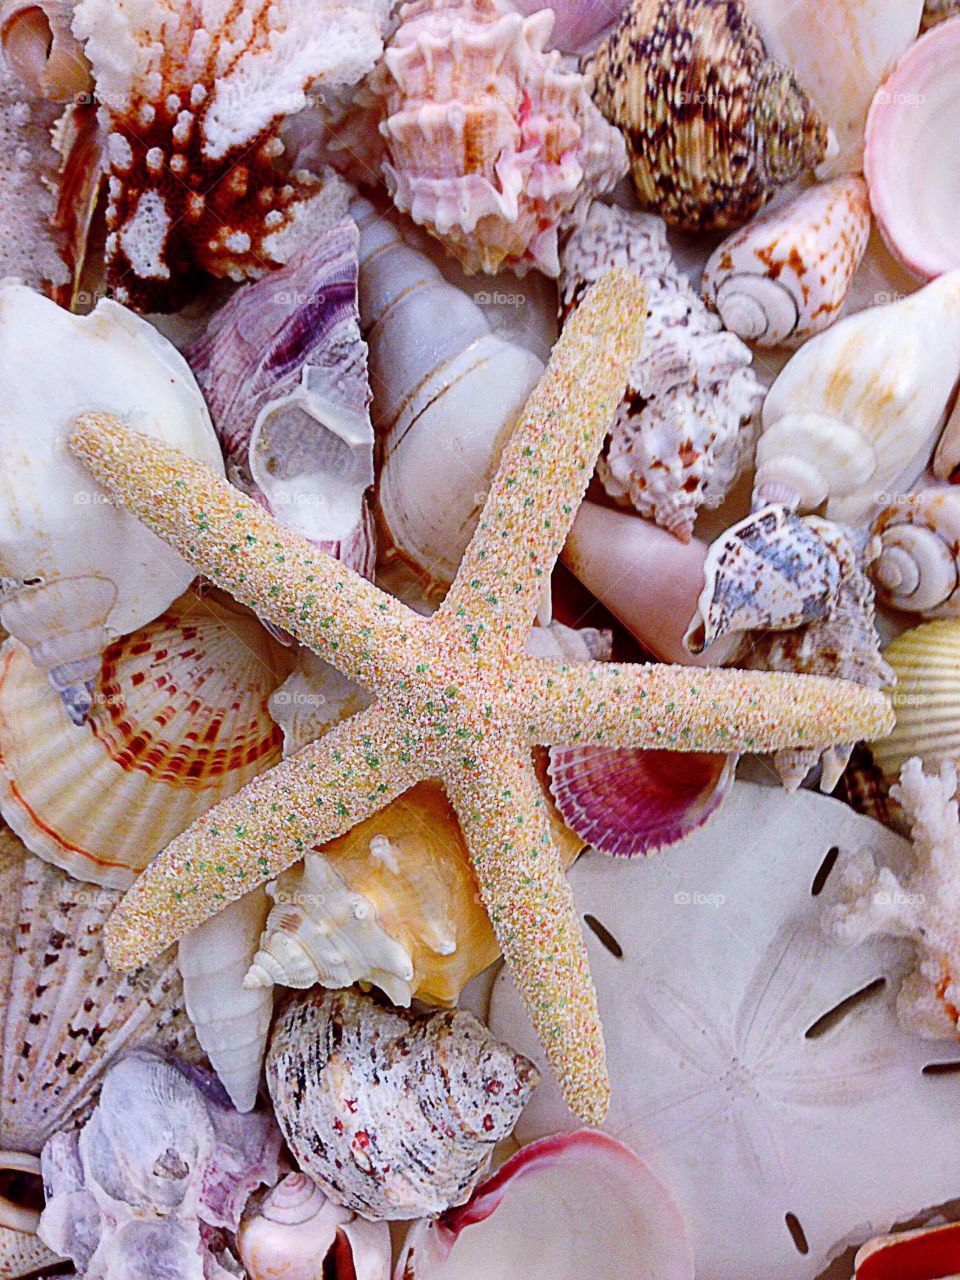 Seashells and a starfish